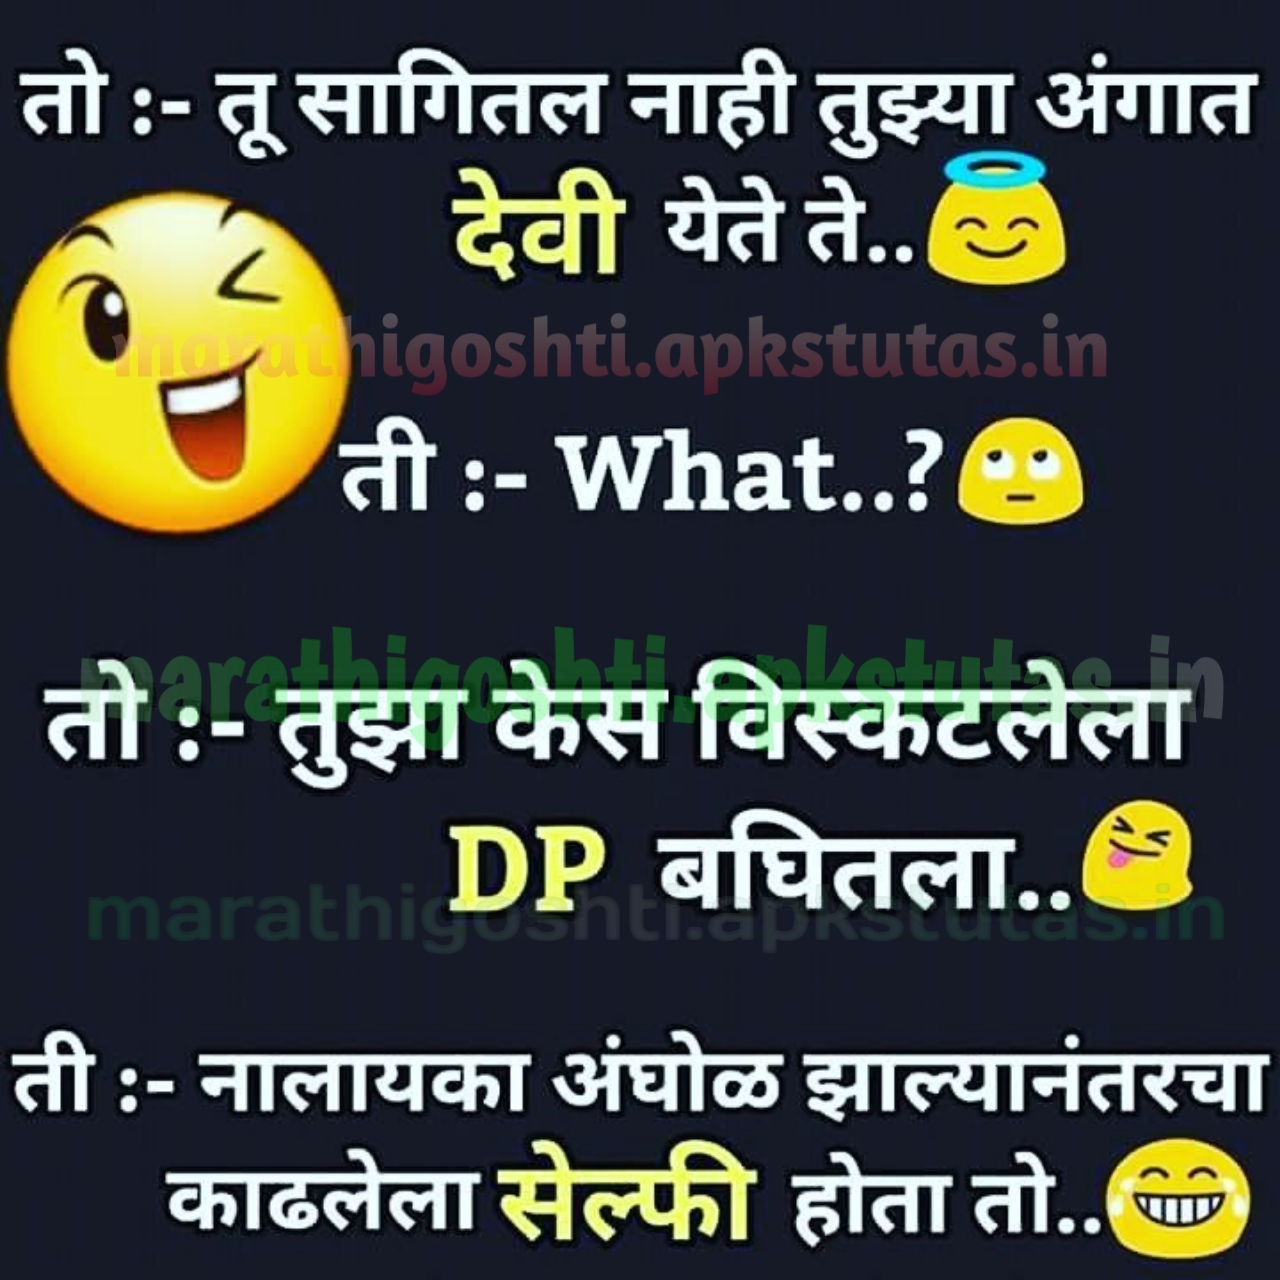 2020 New Marathi Jokes For WhatsApp Jokes In Marathi - Marathi goshti